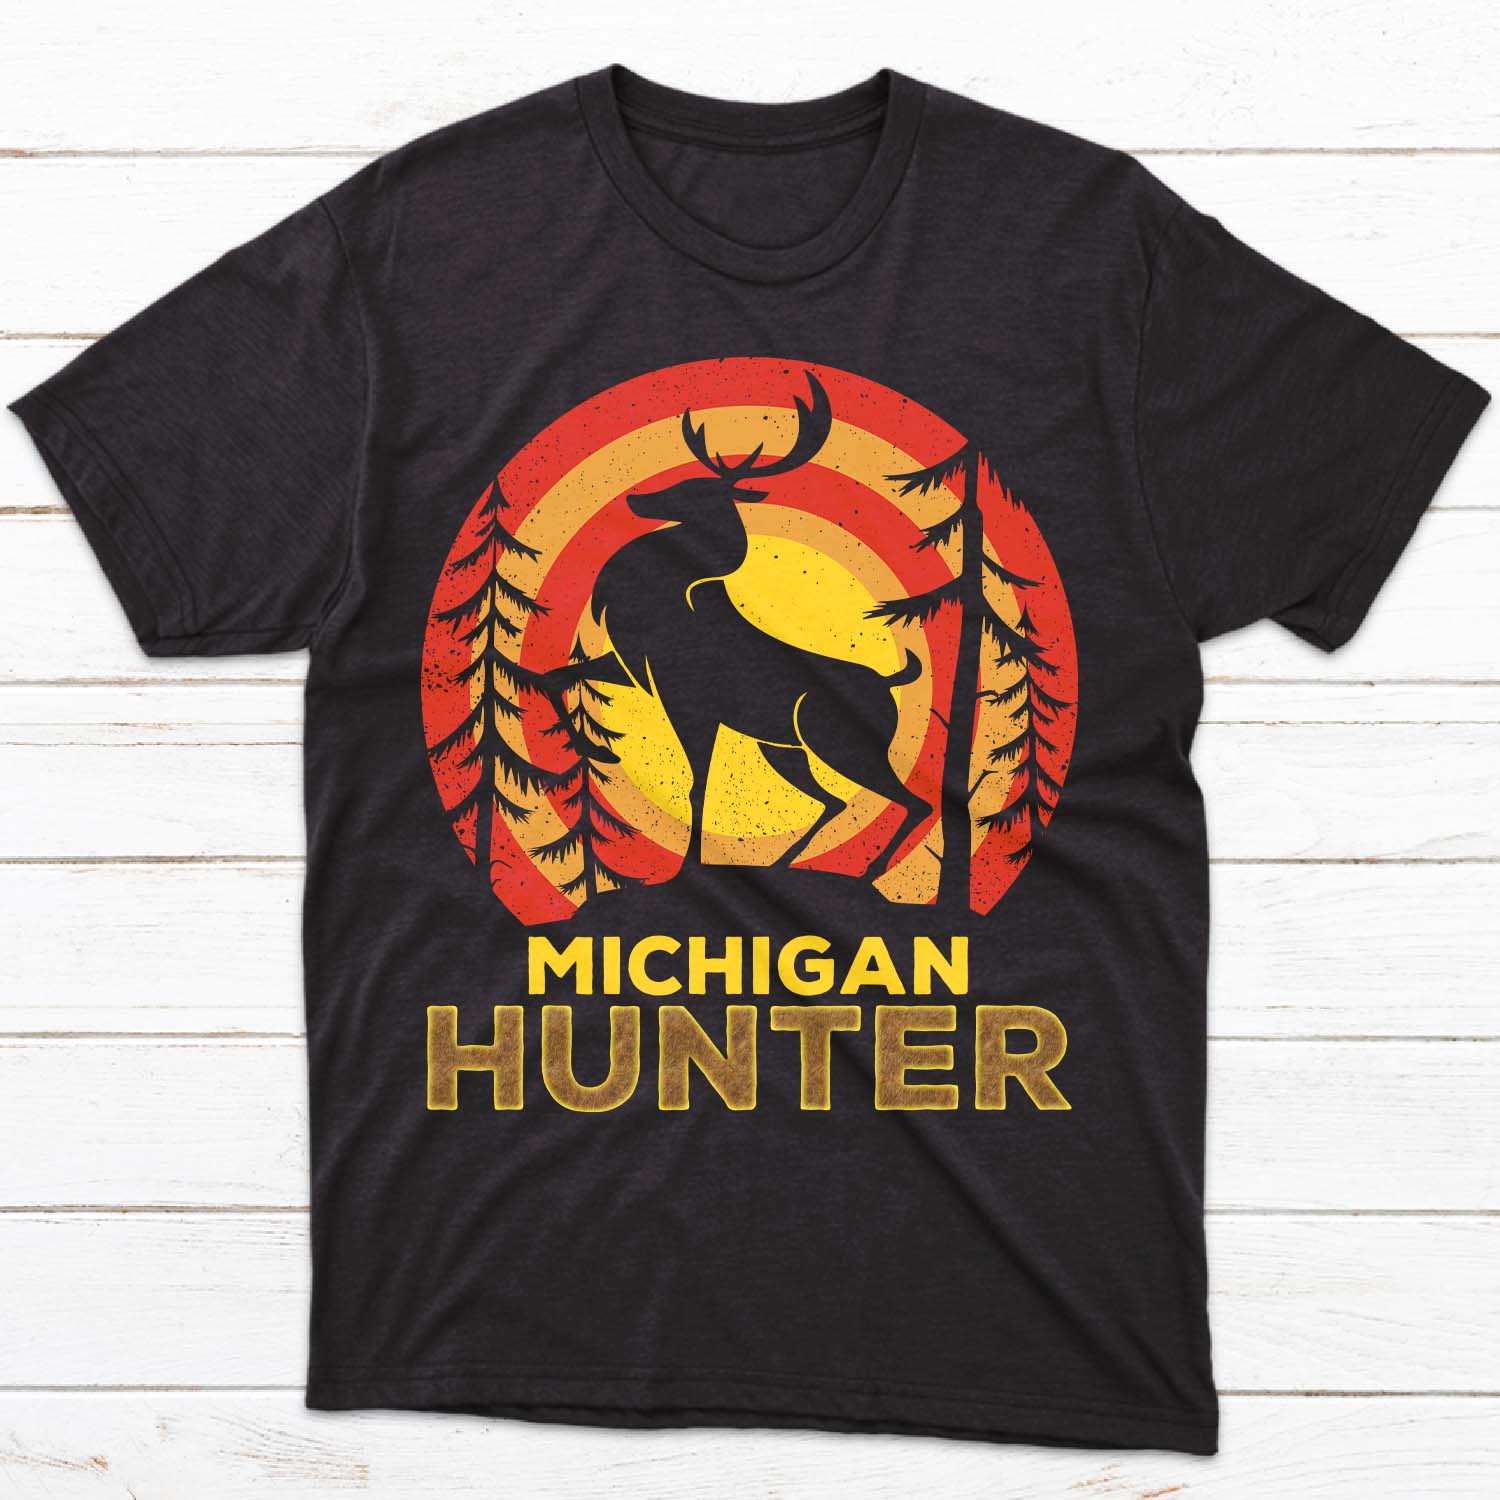 Hunter Shirt Personalized Text